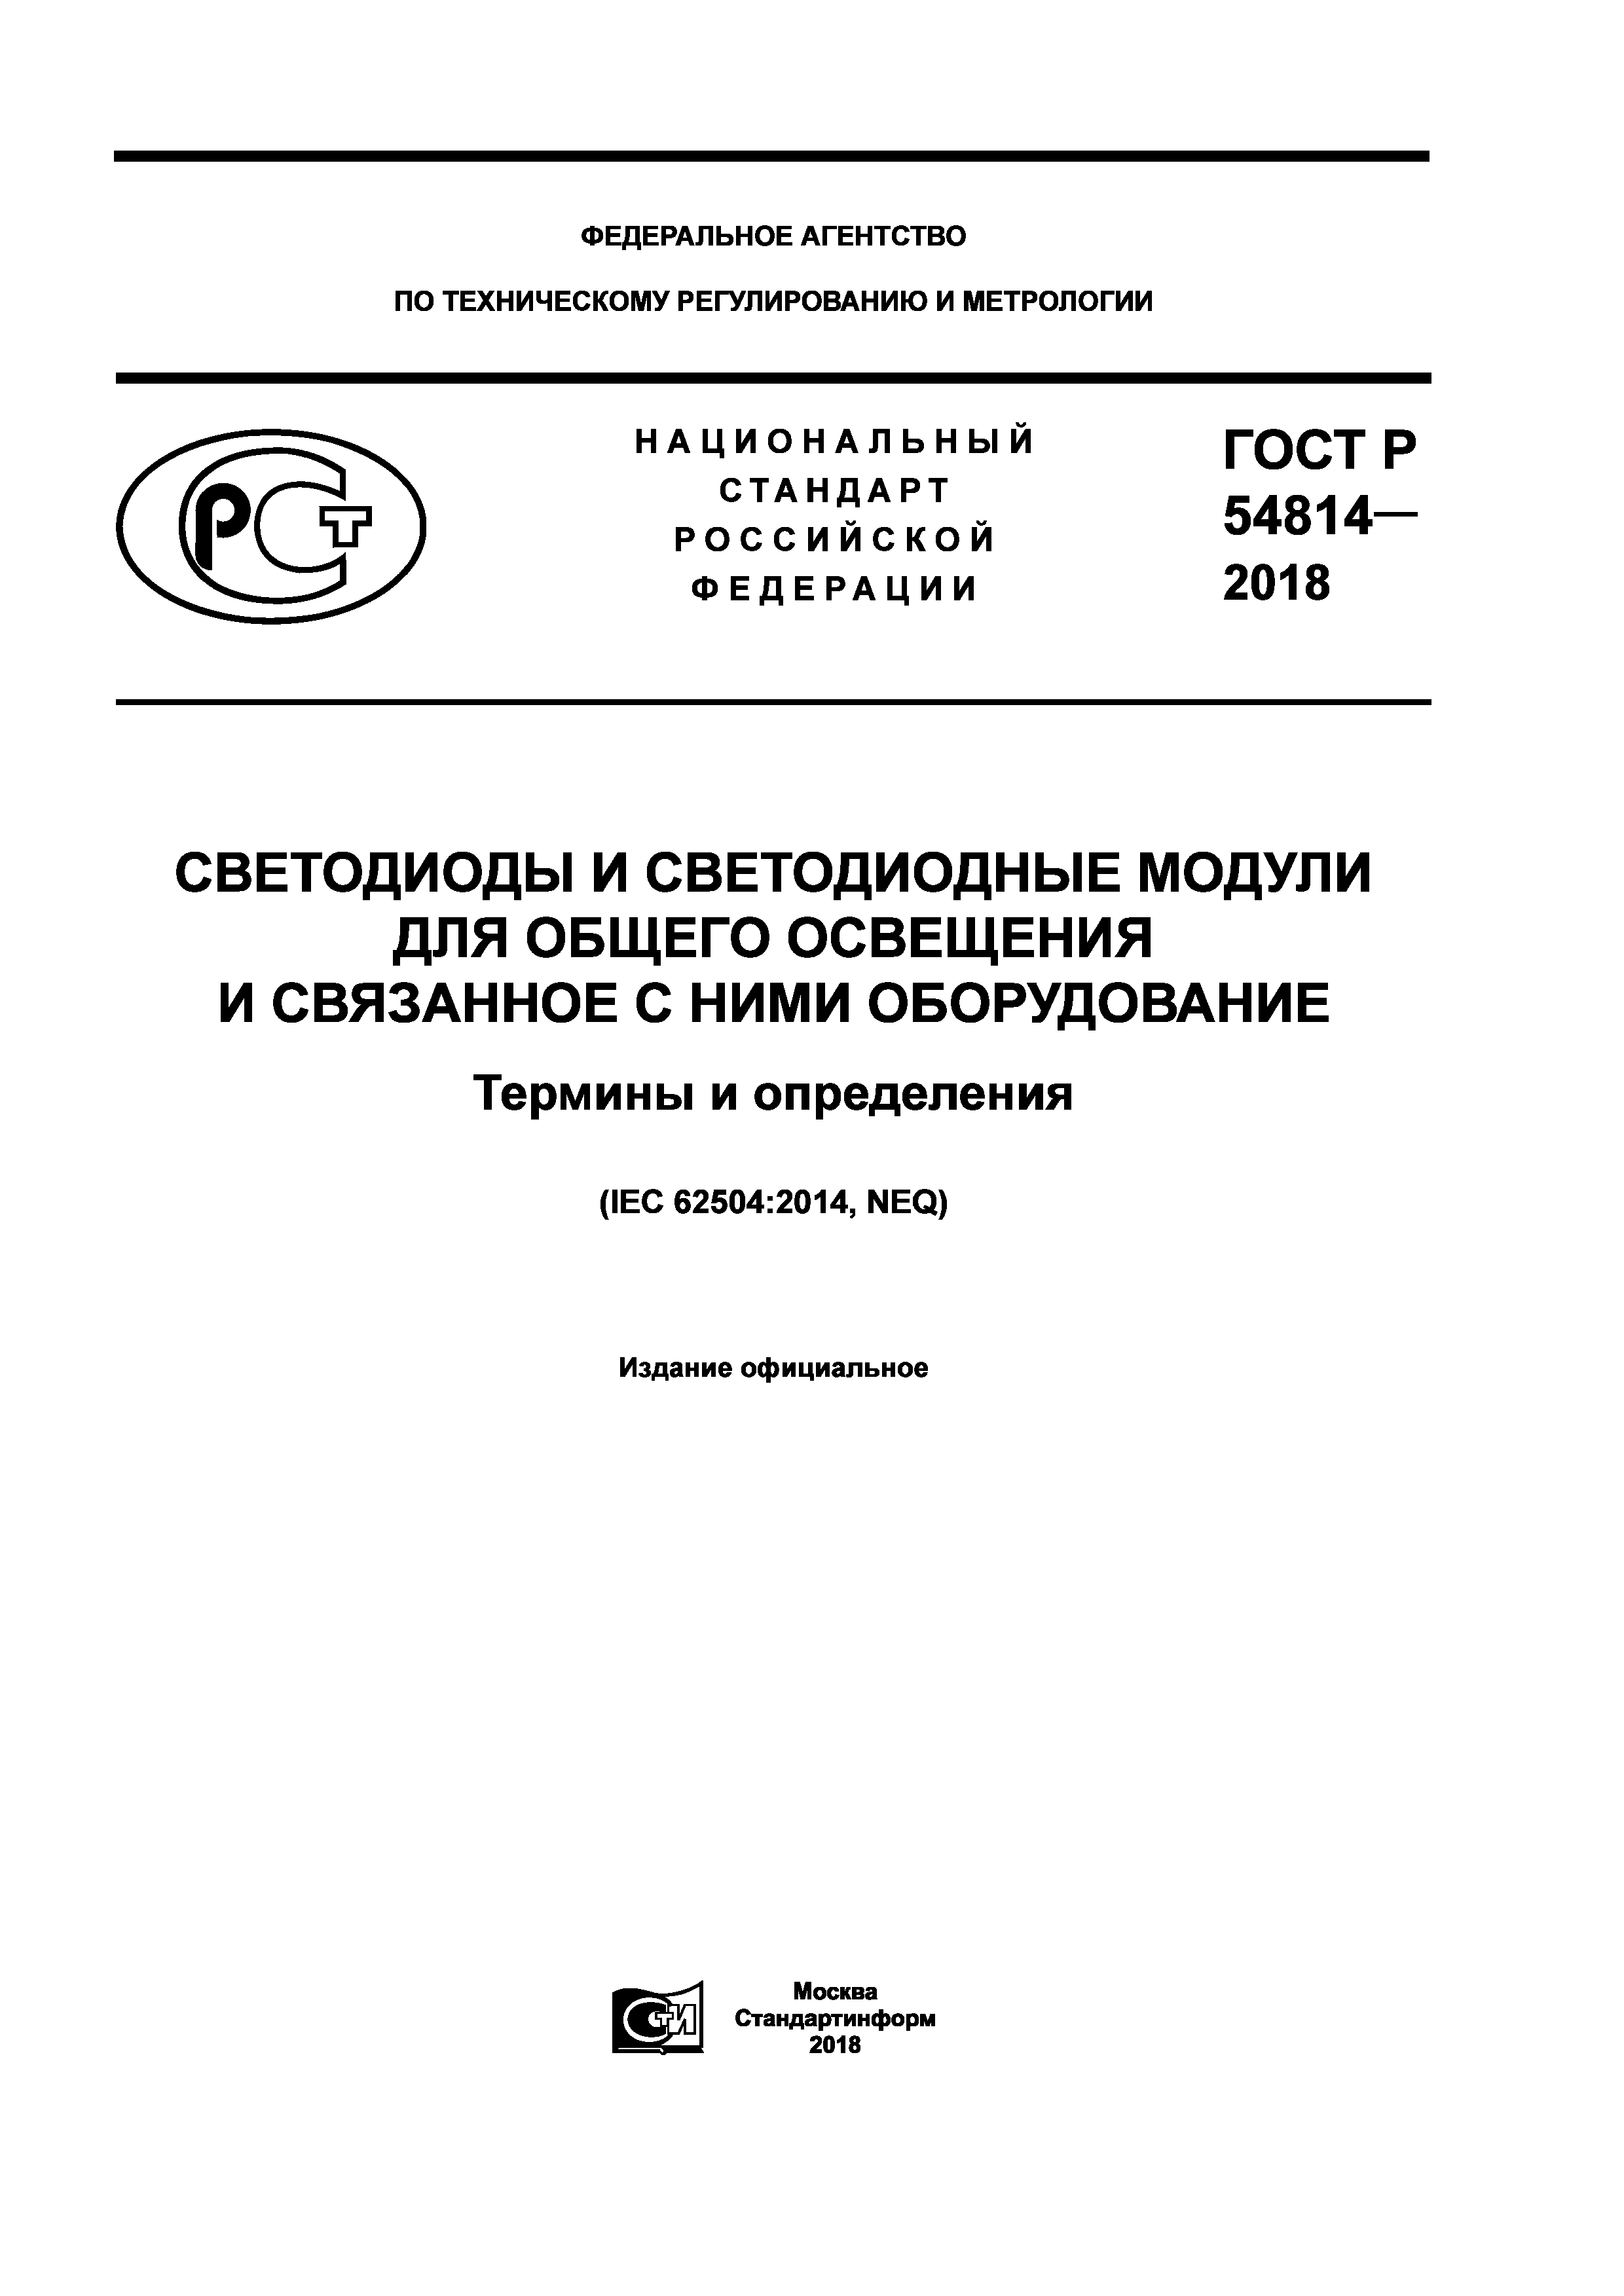 ГОСТ Р 54814-2018